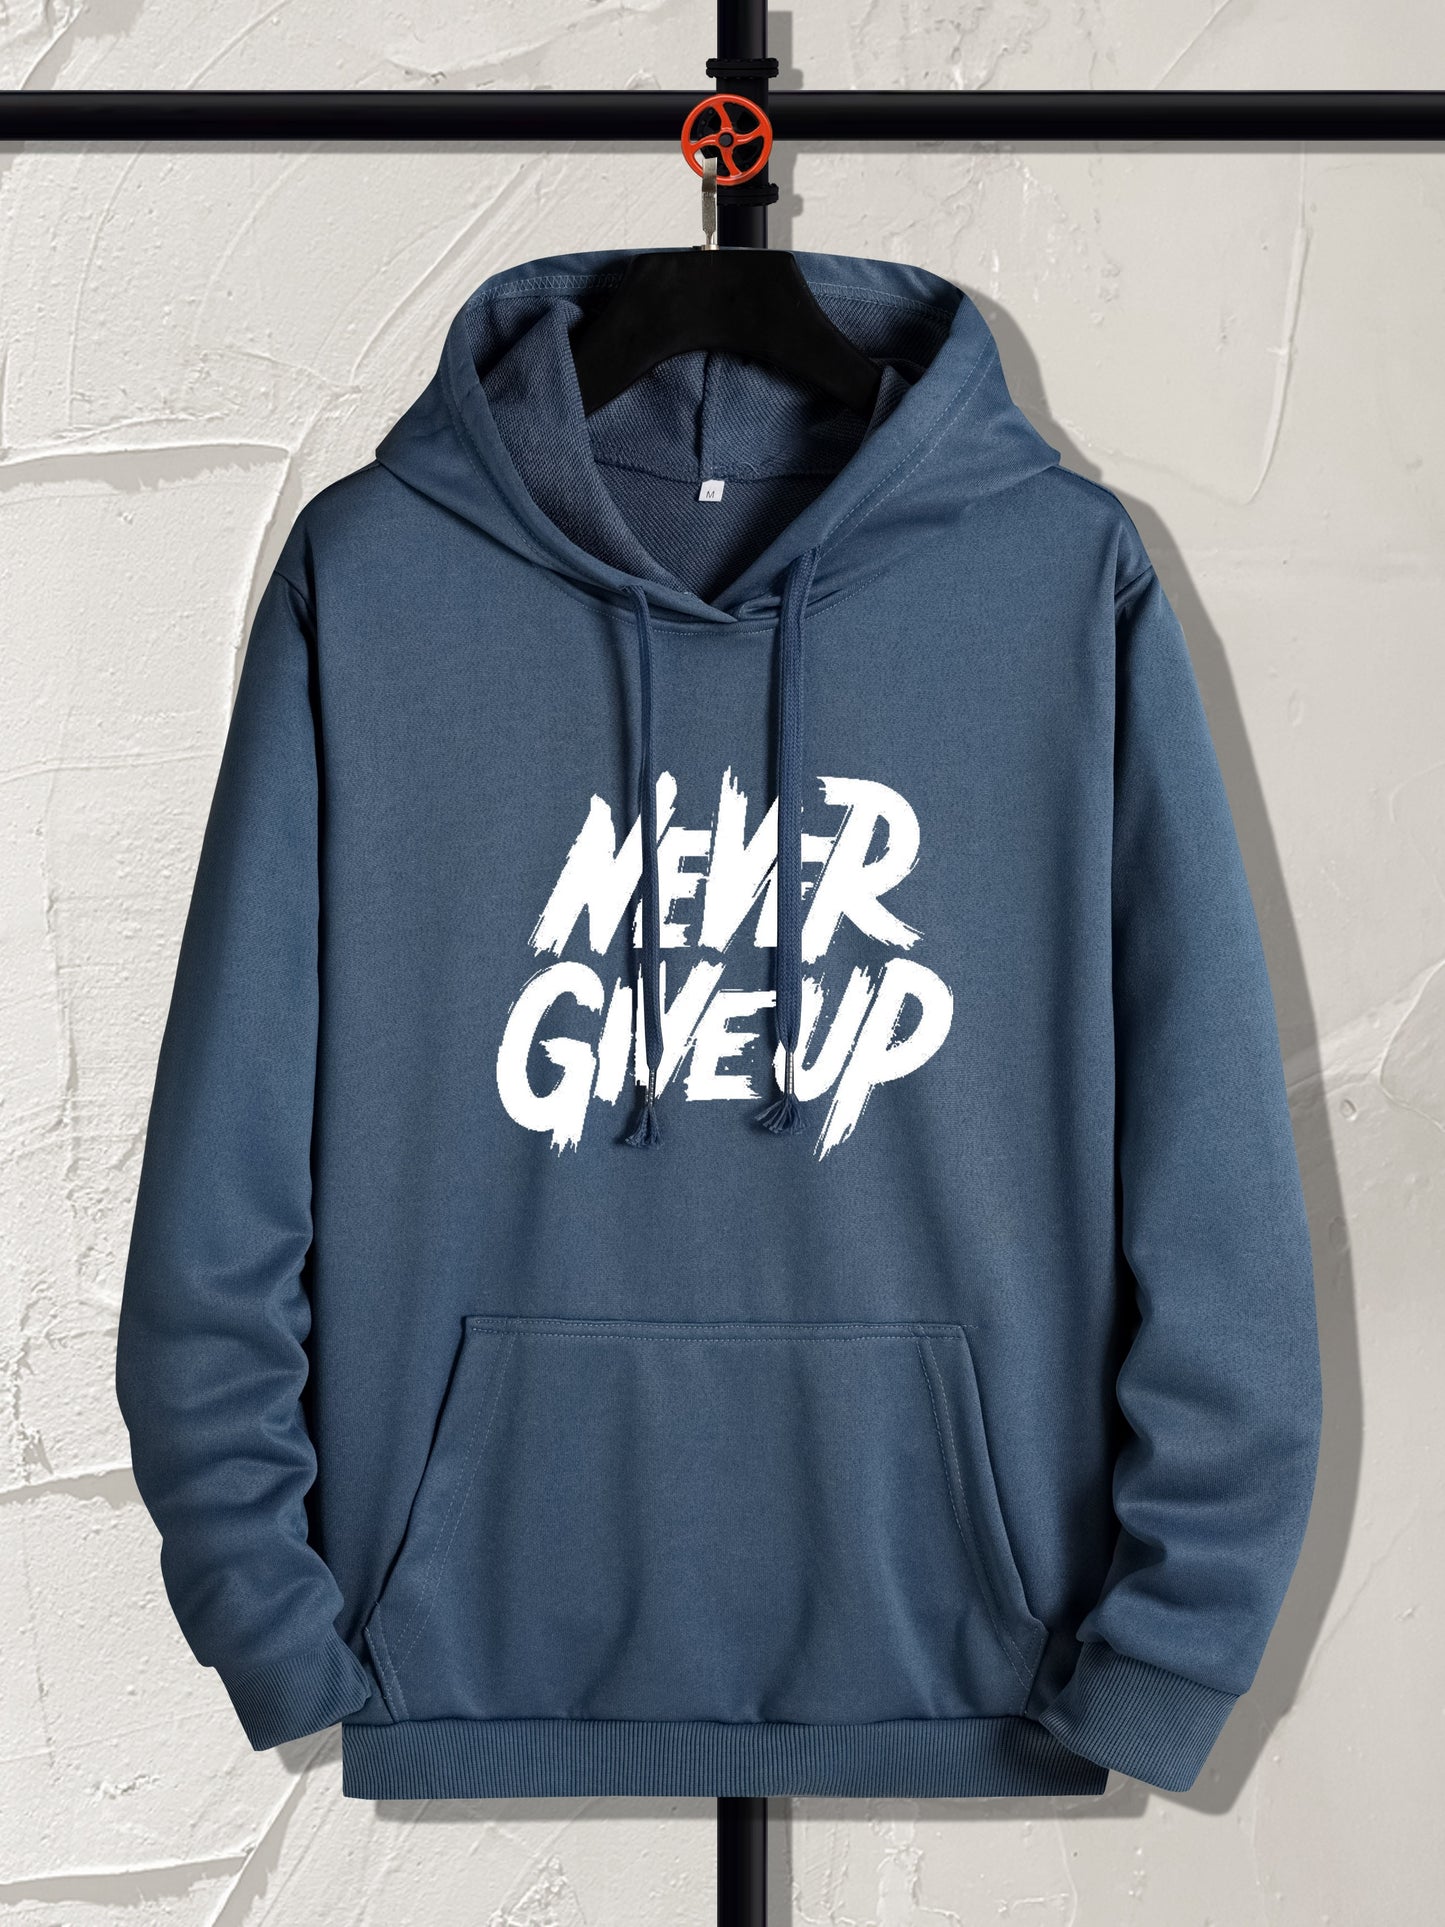 Never Give Up Men's Christian Pullover Hooded Sweatshirt claimedbygoddesigns